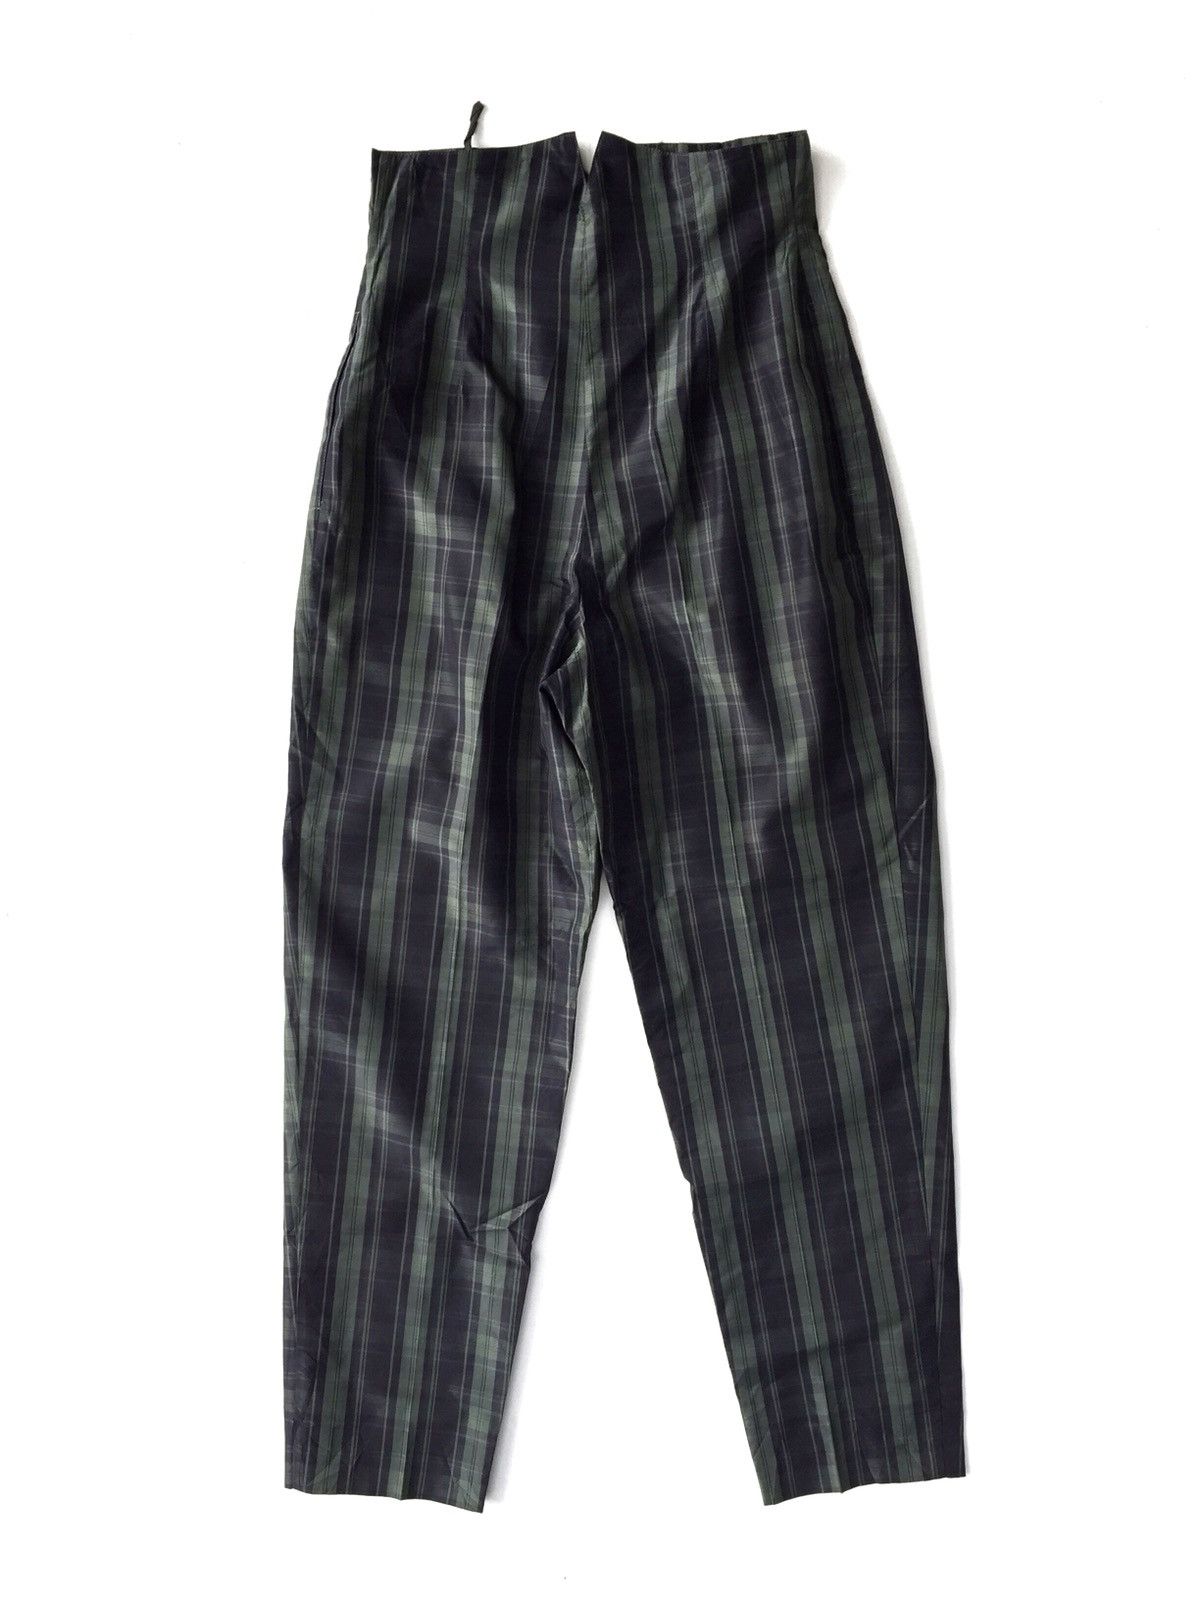 Vintage Vintage Norma Kamali Checkered High Waist Pants Size US 26 / EU 42 - 2 Preview